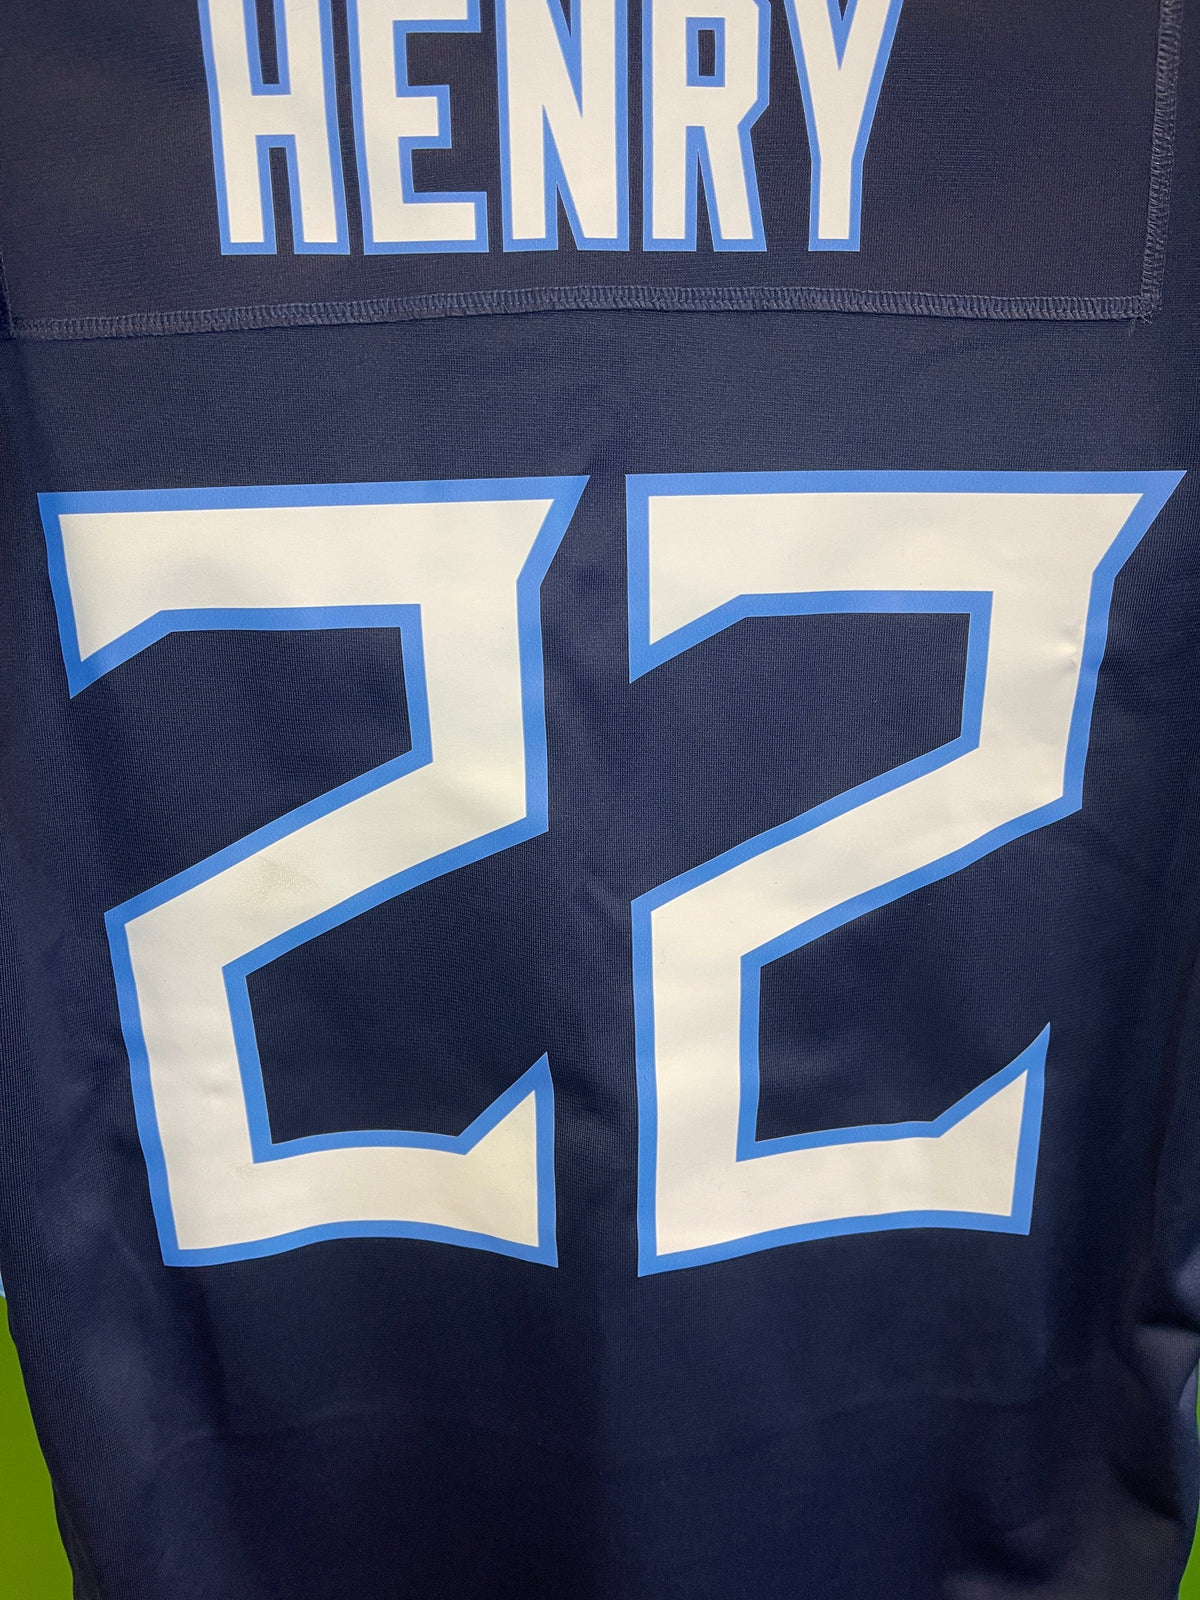 NFL Tennessee Titans Derrick Henry #22 Game Jersey Men's Medium NWOT